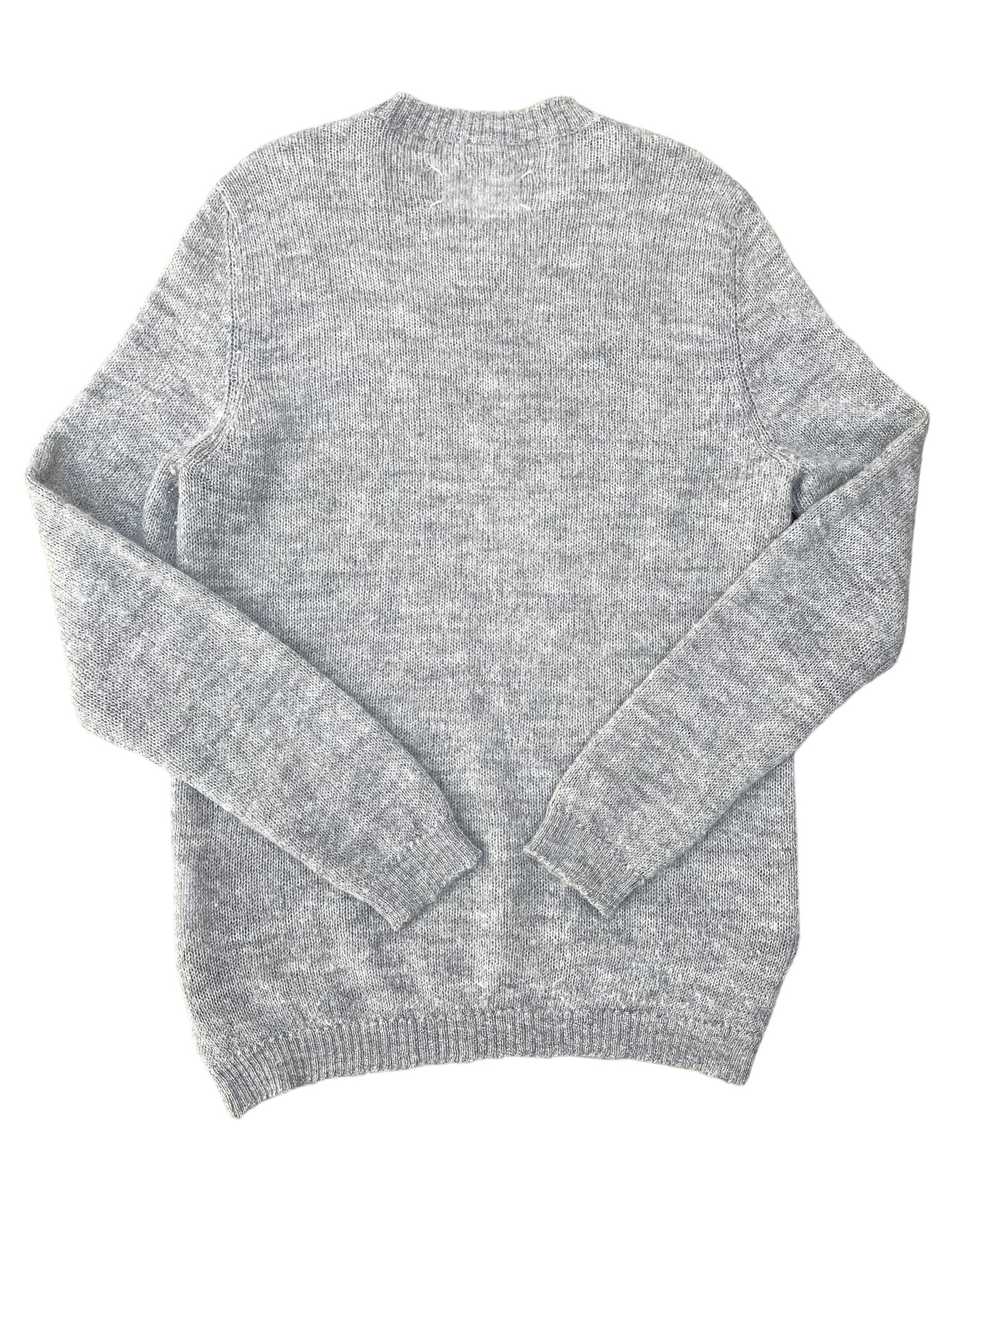 Maison Margiela FW 2013 Grey Alpaca Sweater - image 3